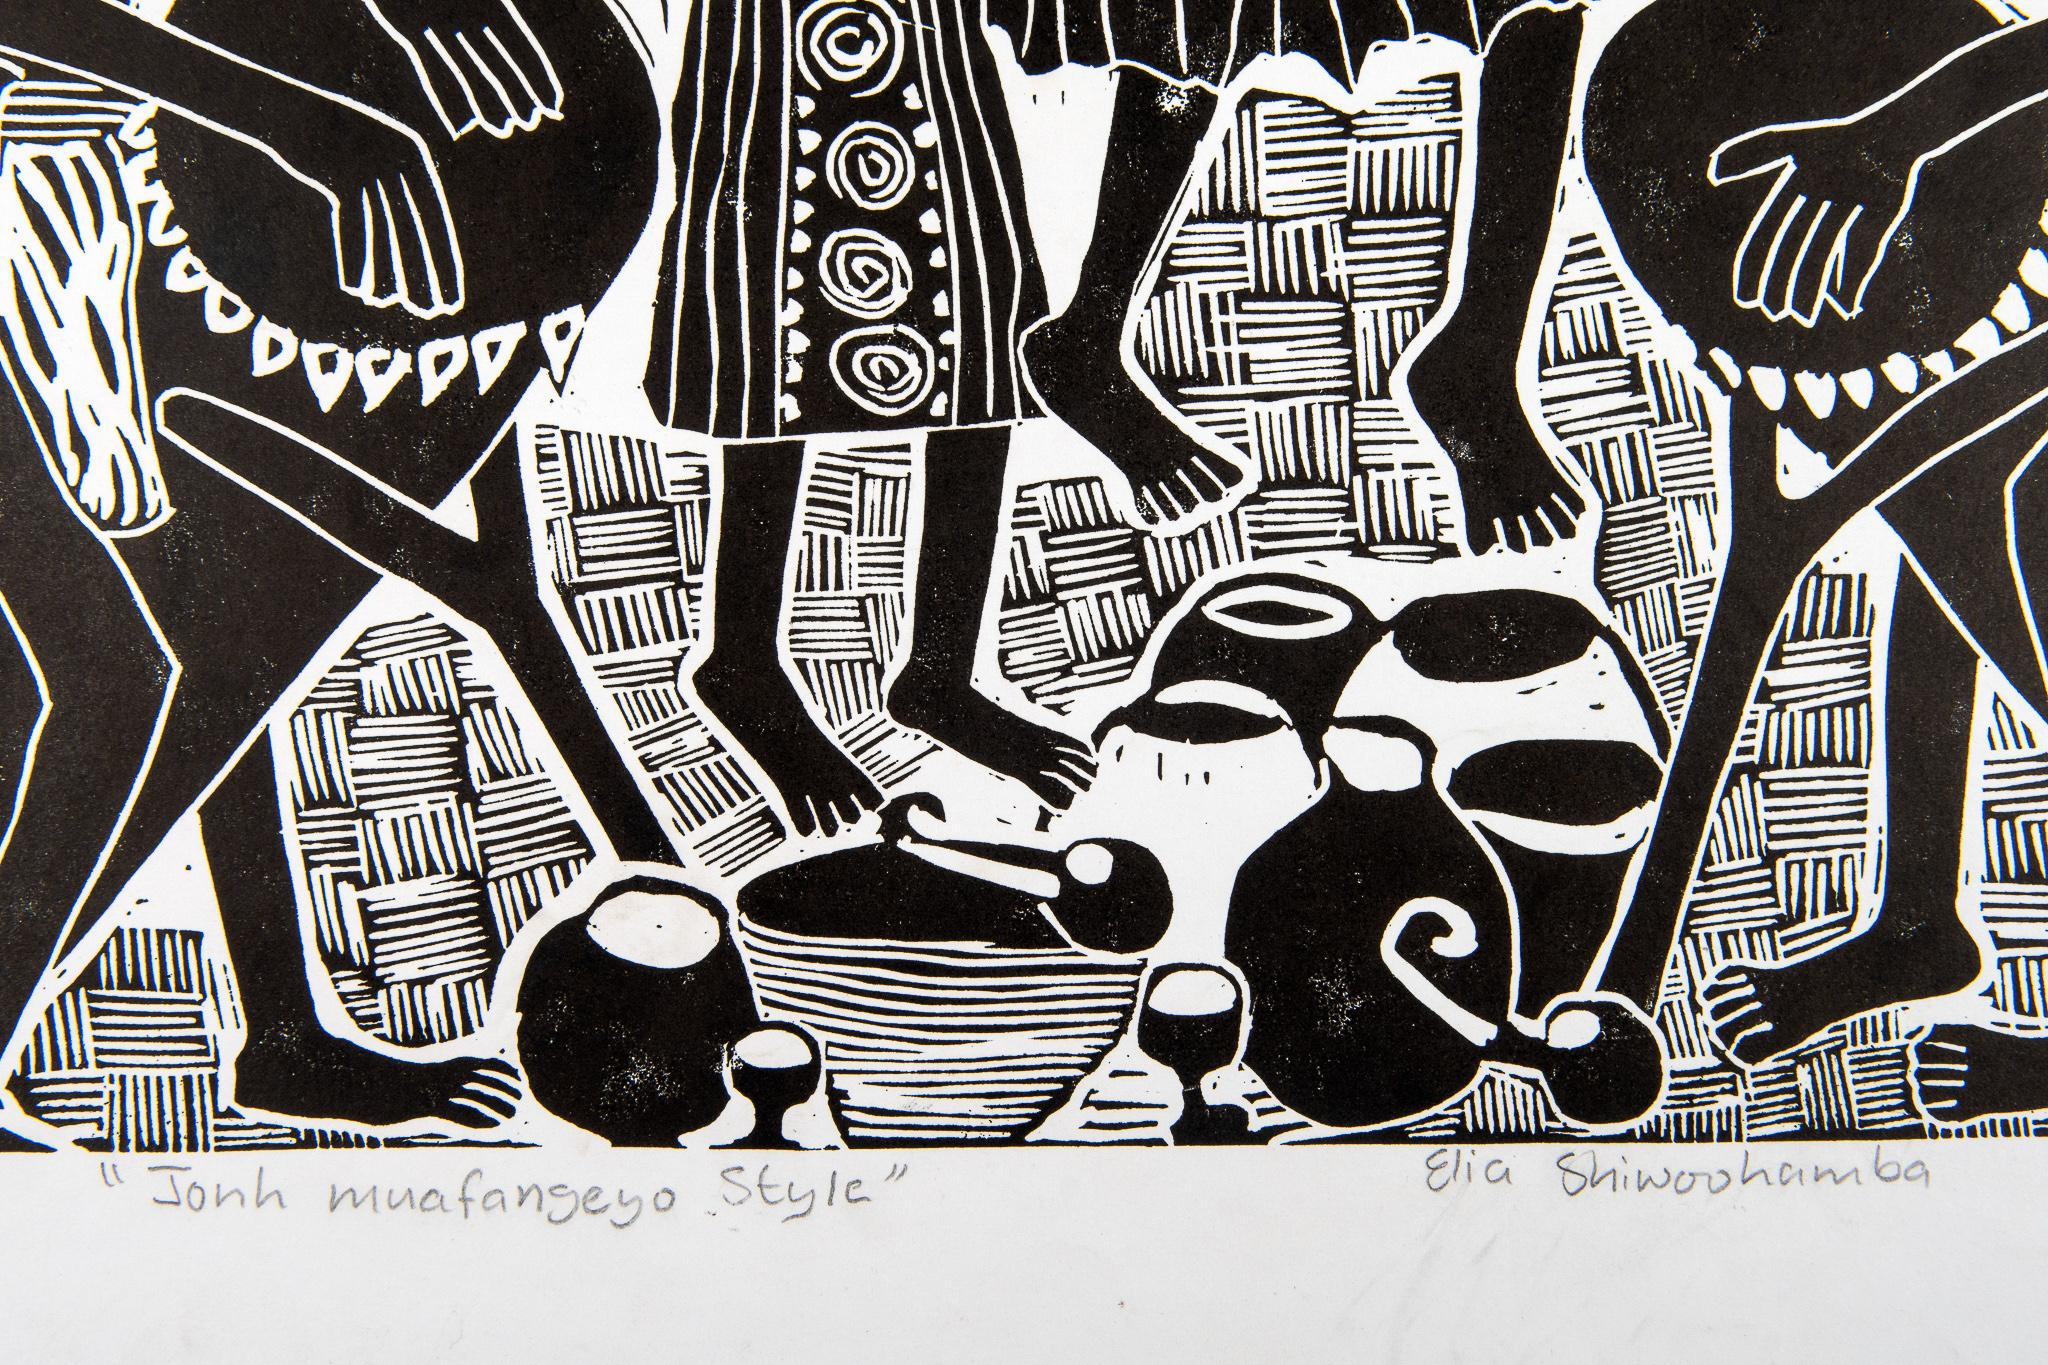 Impression de blocs de linoléum sur papier de style John Muafangejo, Elia Shiwoohamba en vente 1